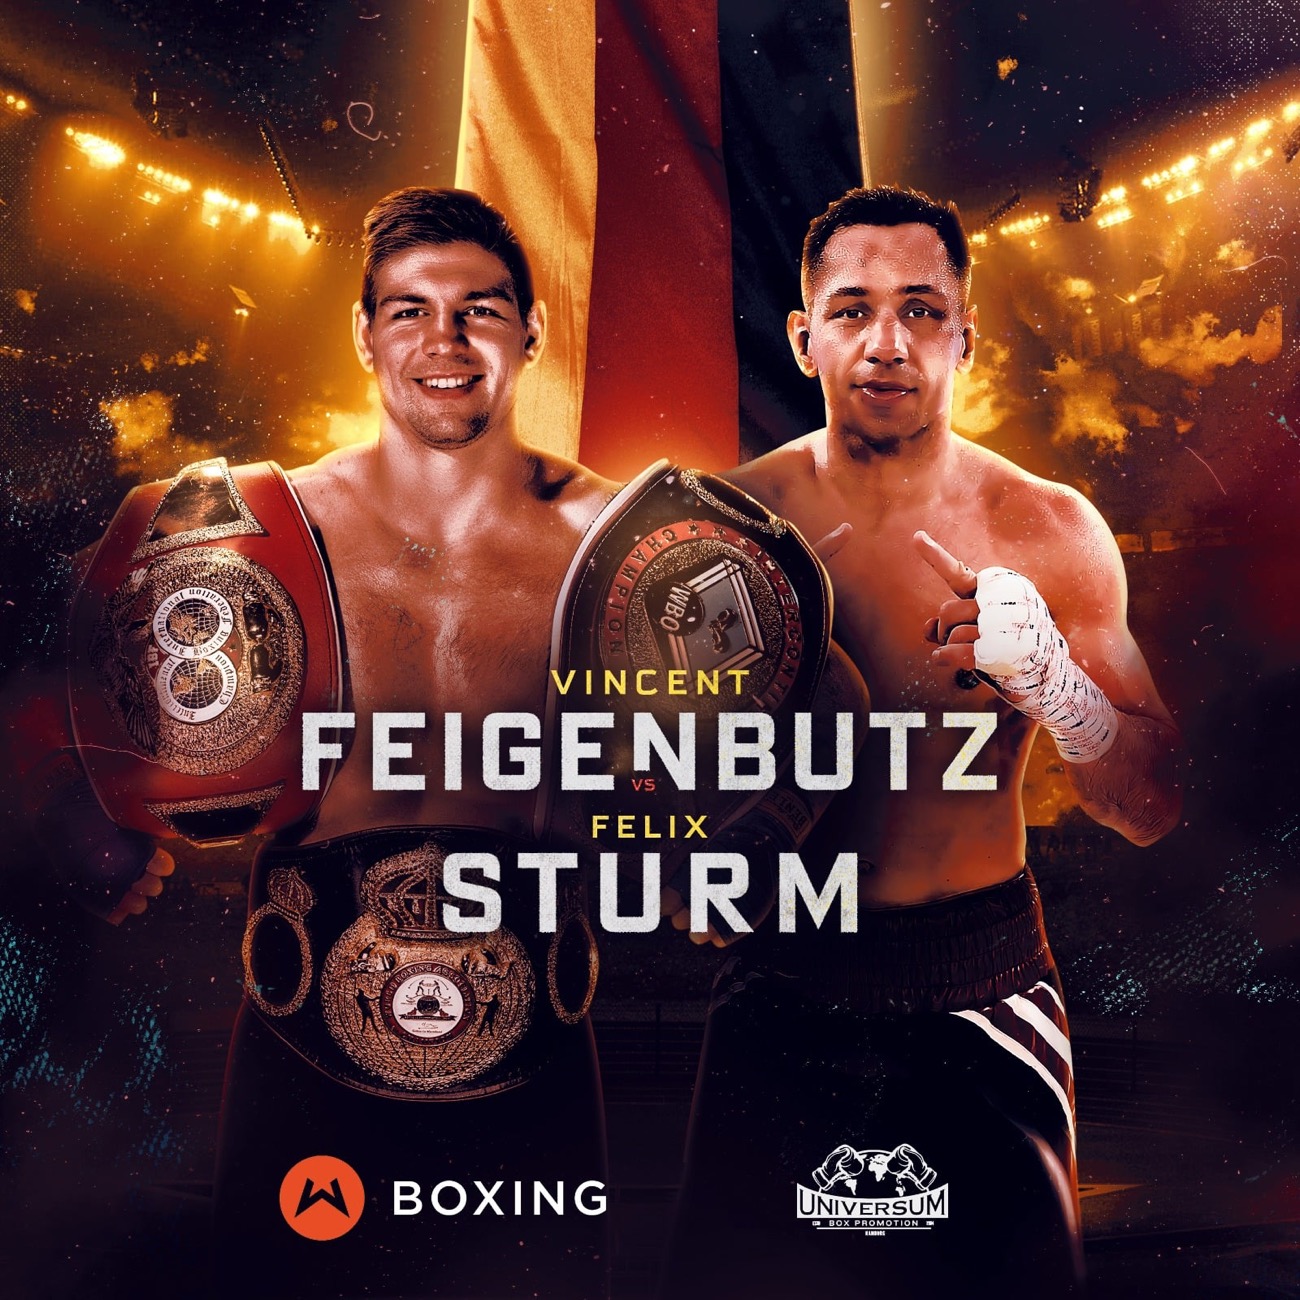 Felix Sturm, Vincent Feigenbutz boxing image / photo